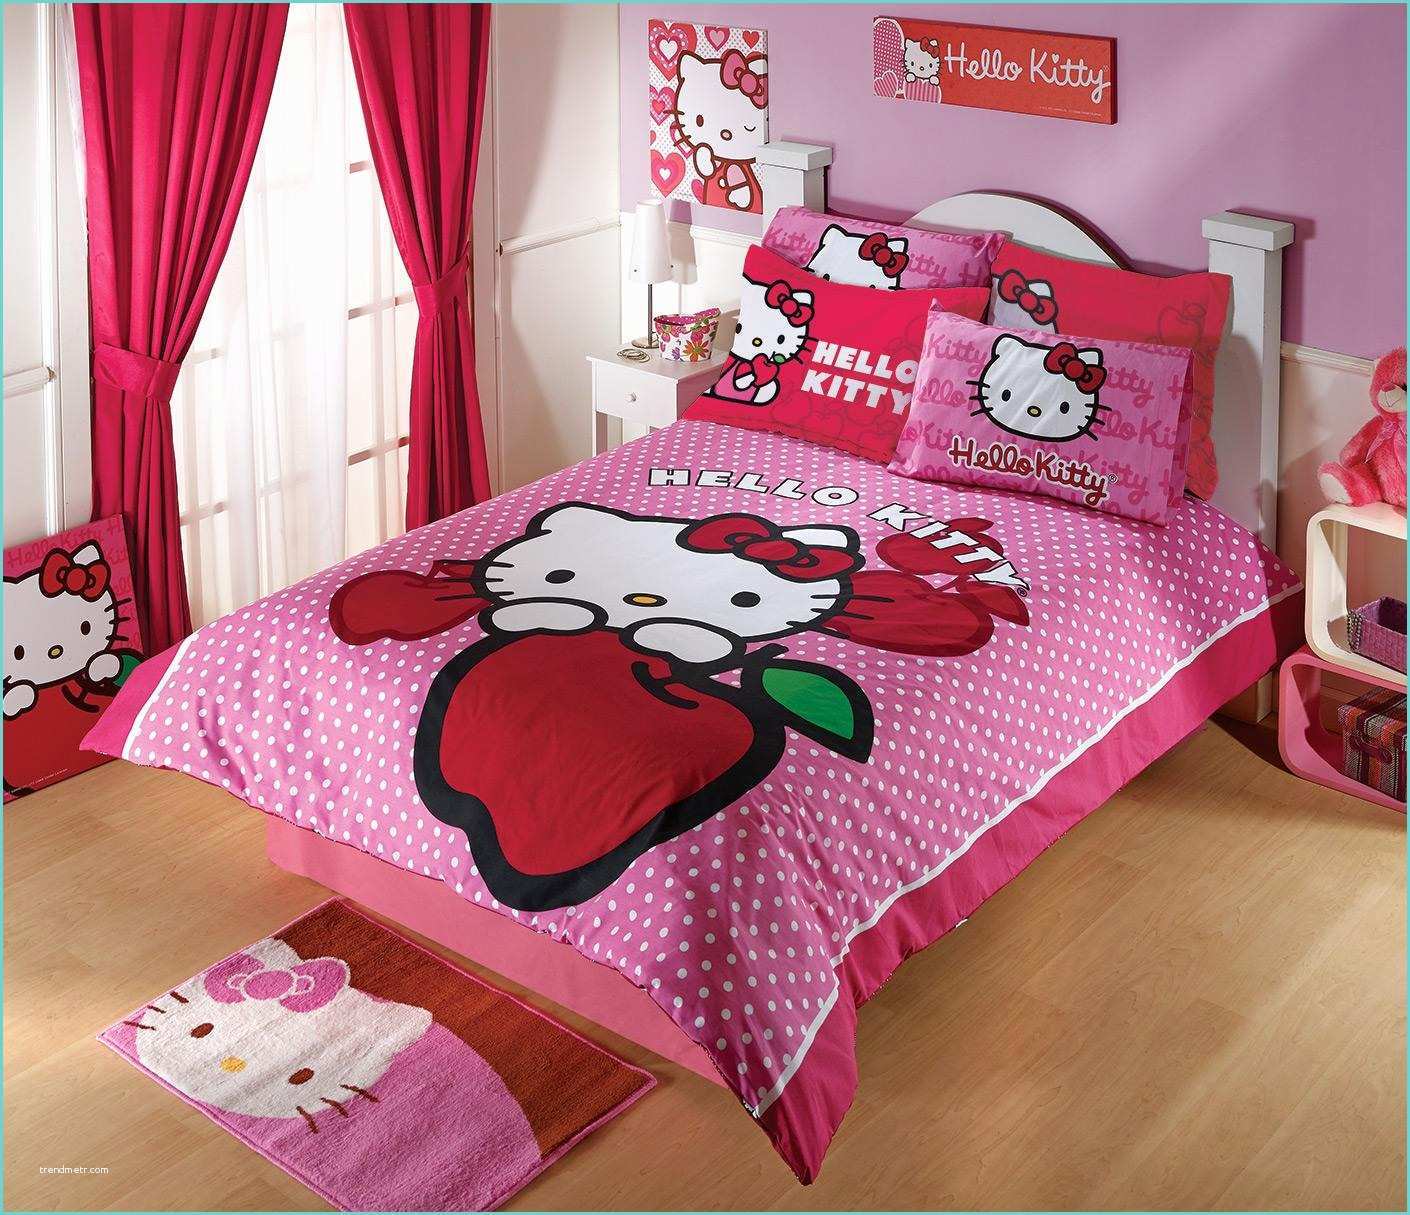 Hello Kitty Bedroom Set Hello Kitty Bedroom – Bedroom at Real Estate